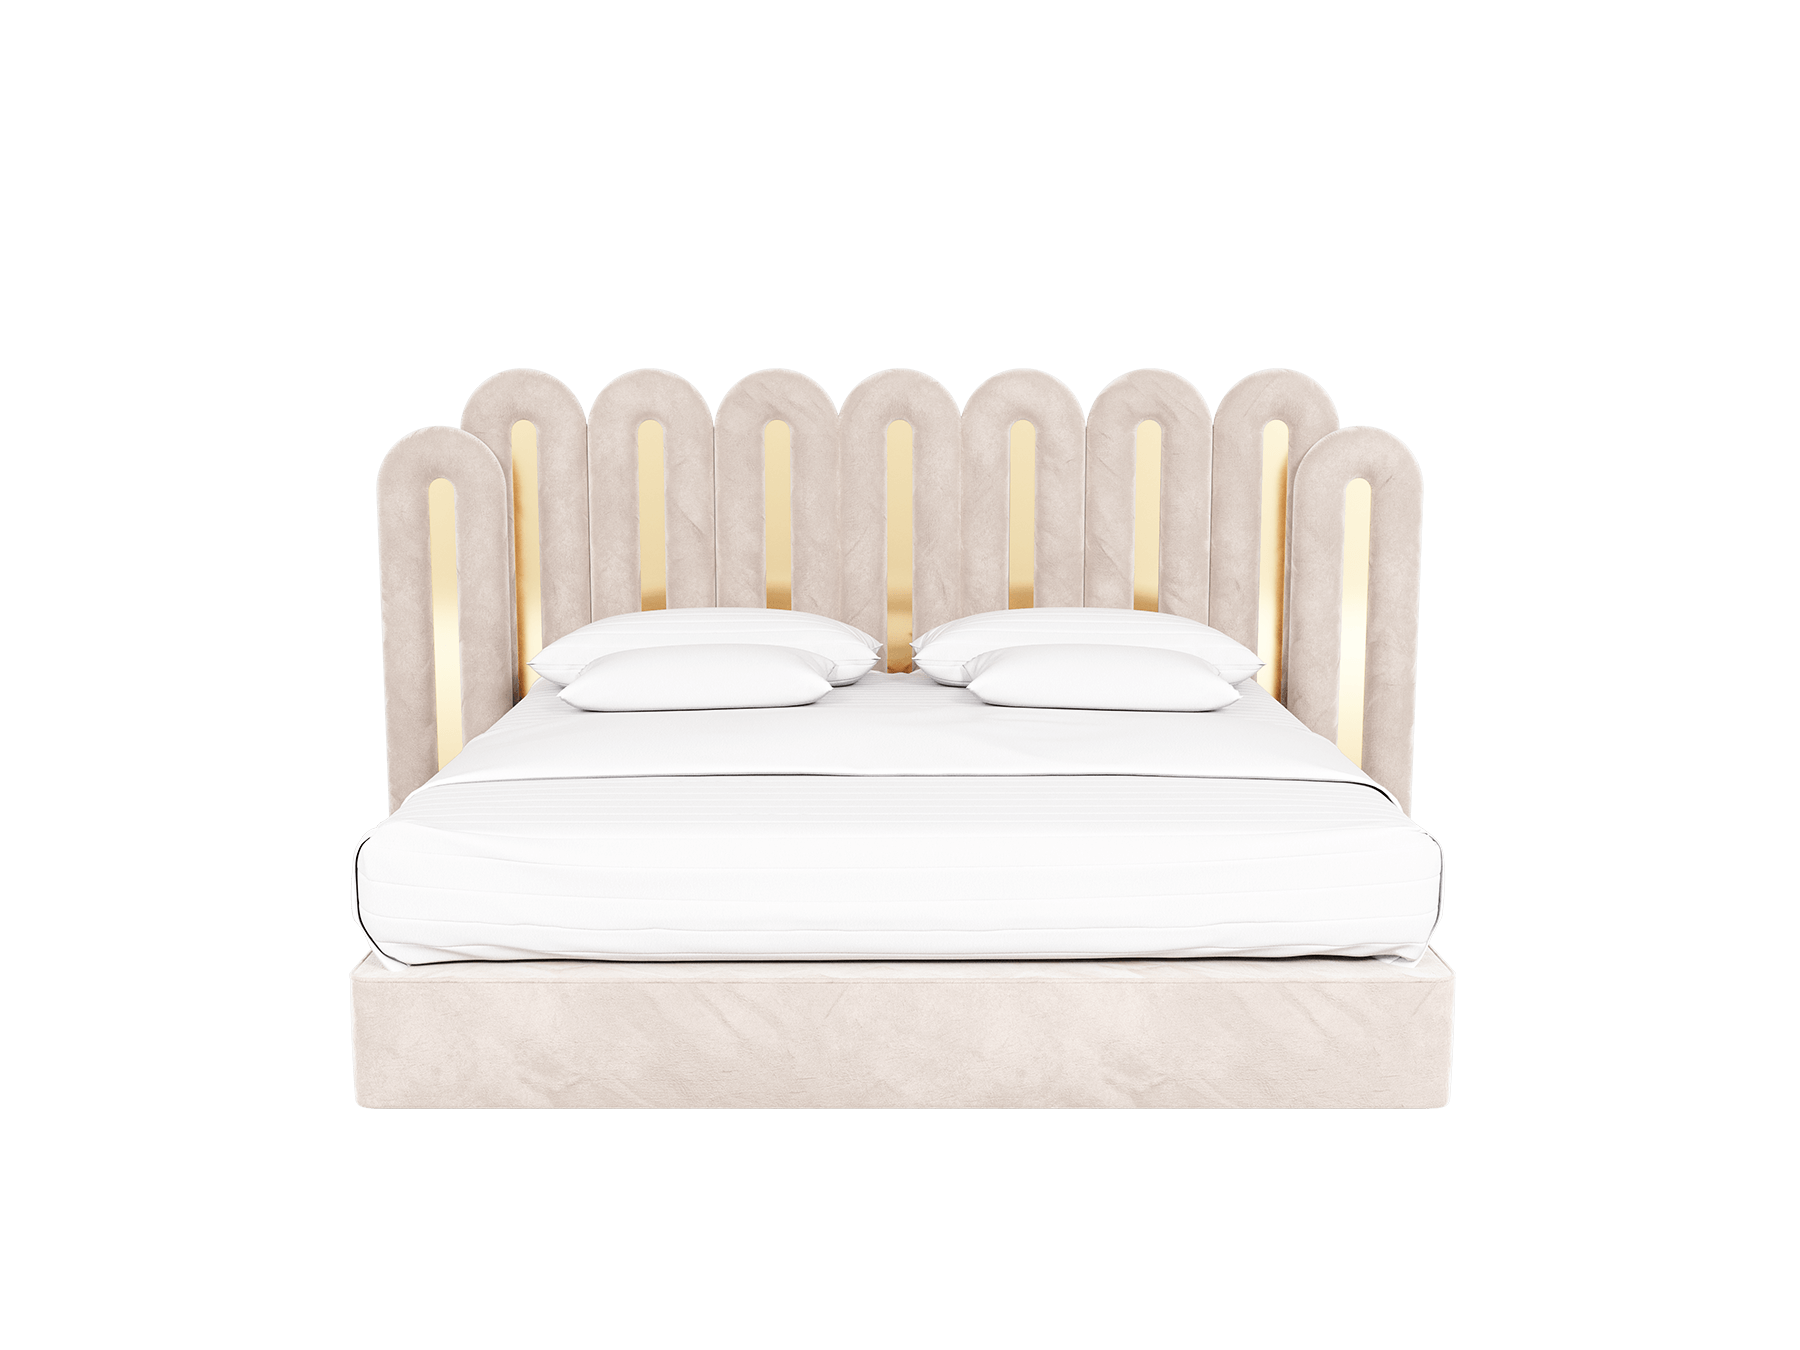 demiz bed for modern bedroom